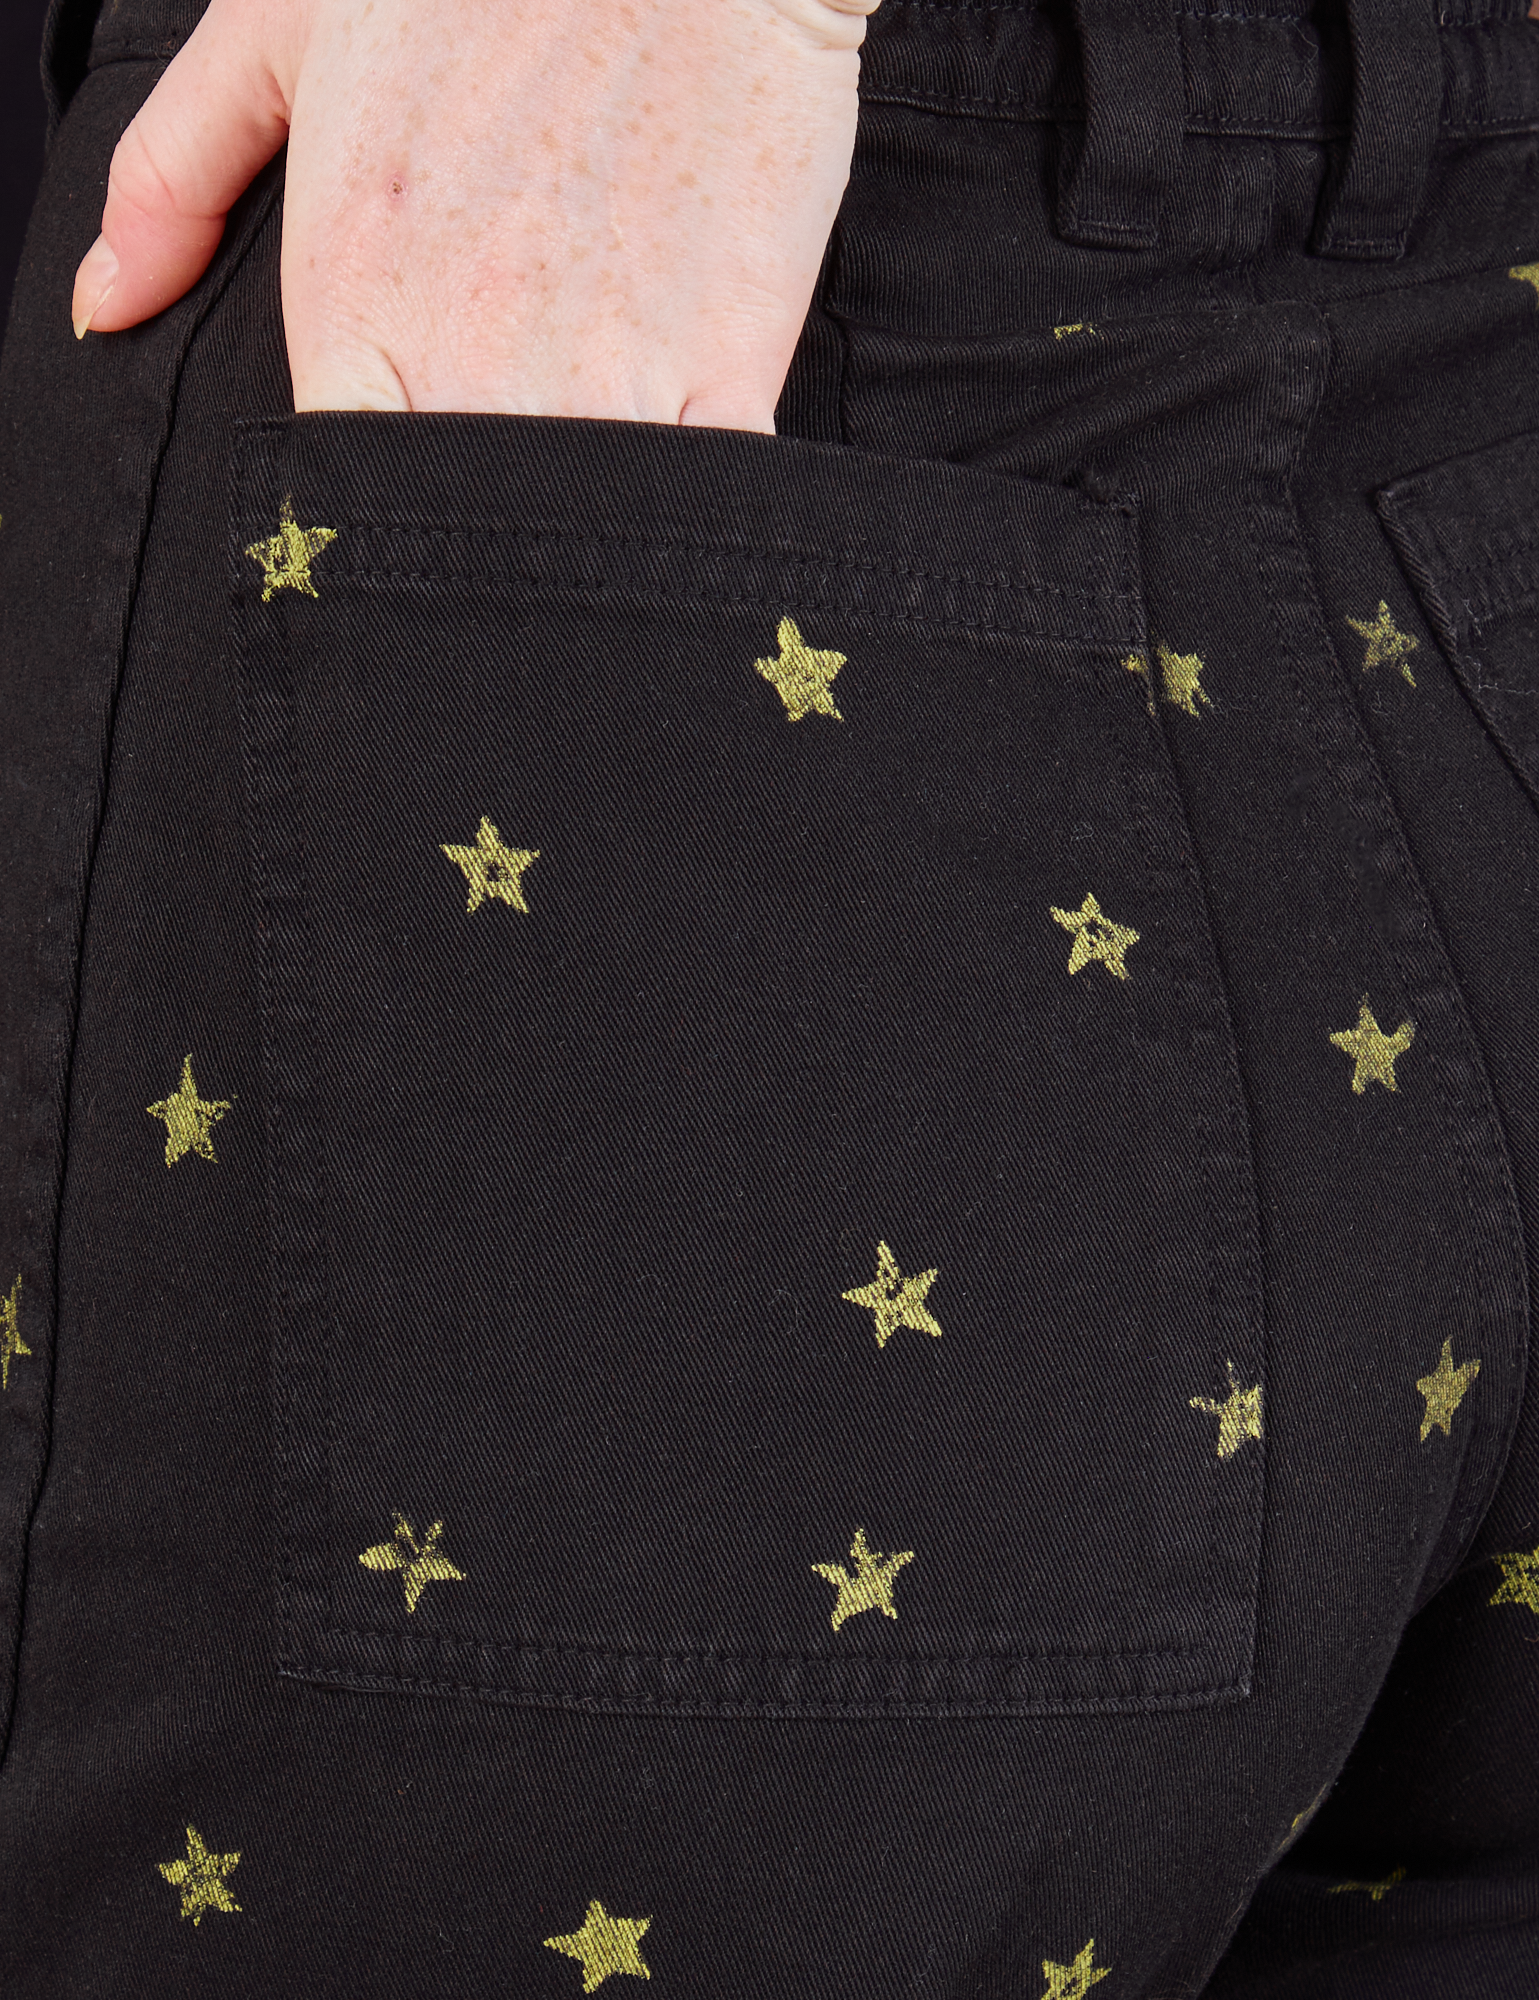 Star Bell Bottoms in Black back pocket close up. Margaret has her hand in the pocket.